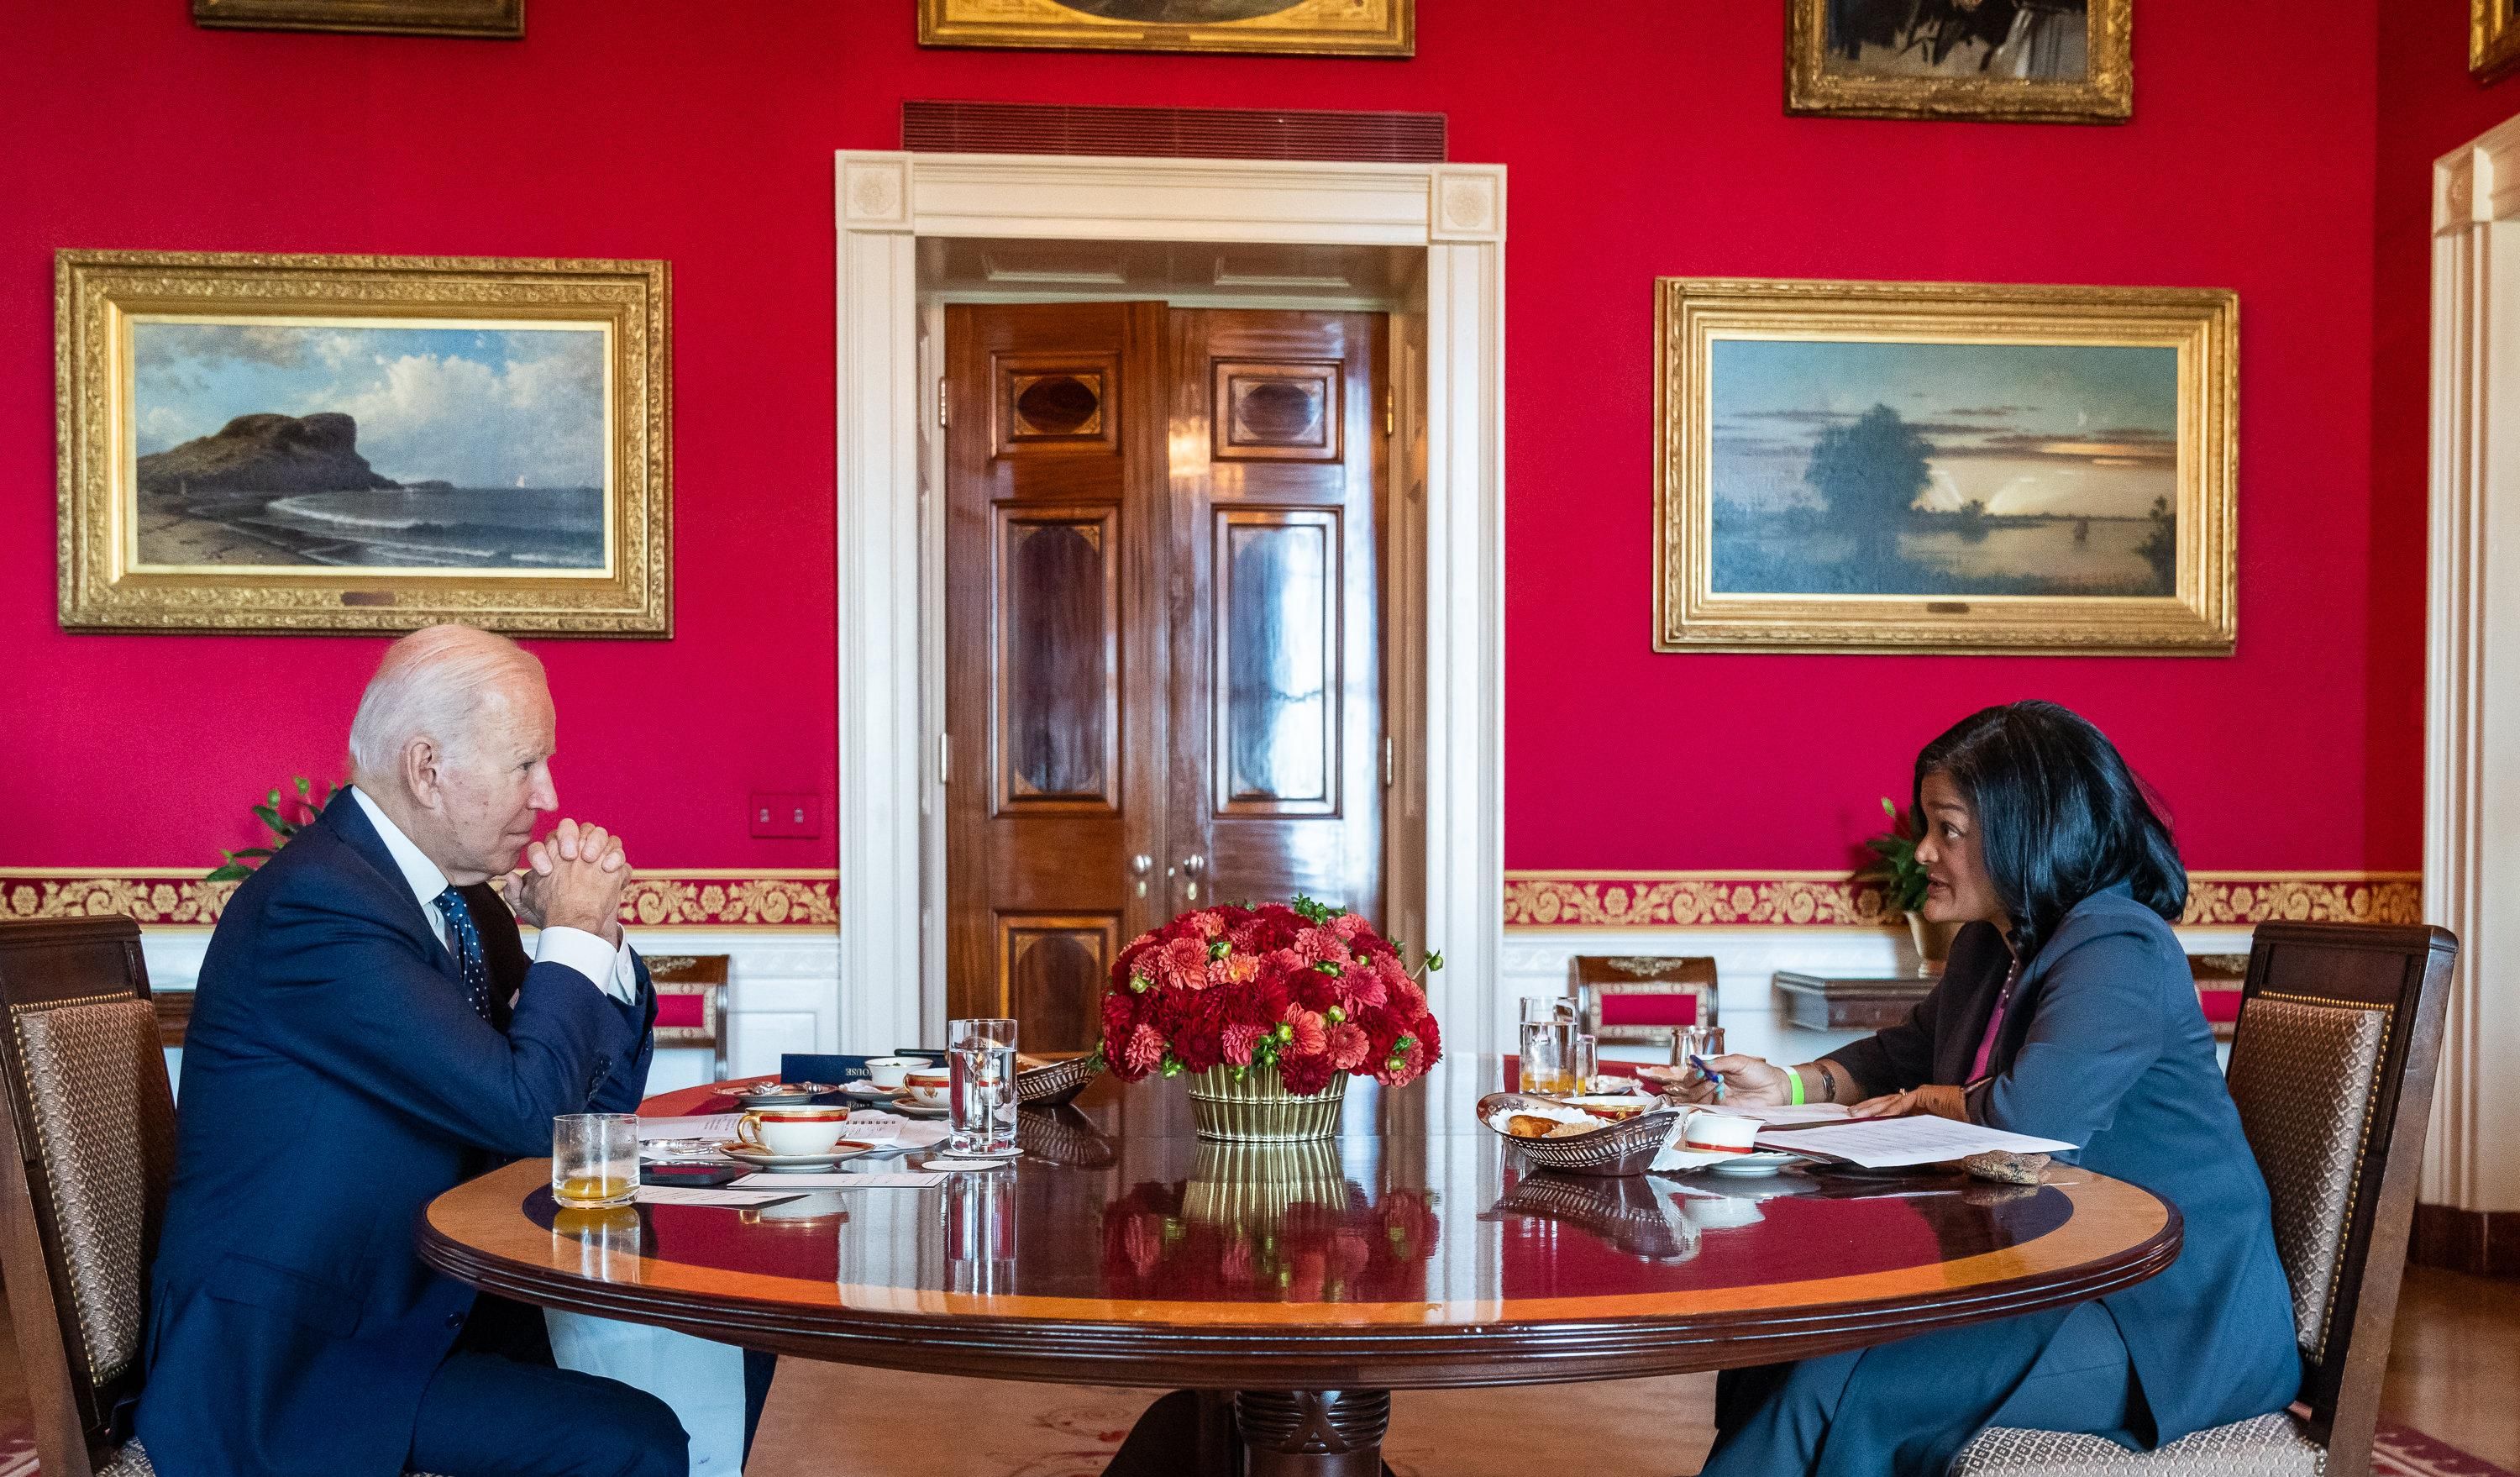 President Joe Biden and Rep. Pramila Jayapal in the Red Room of the White House